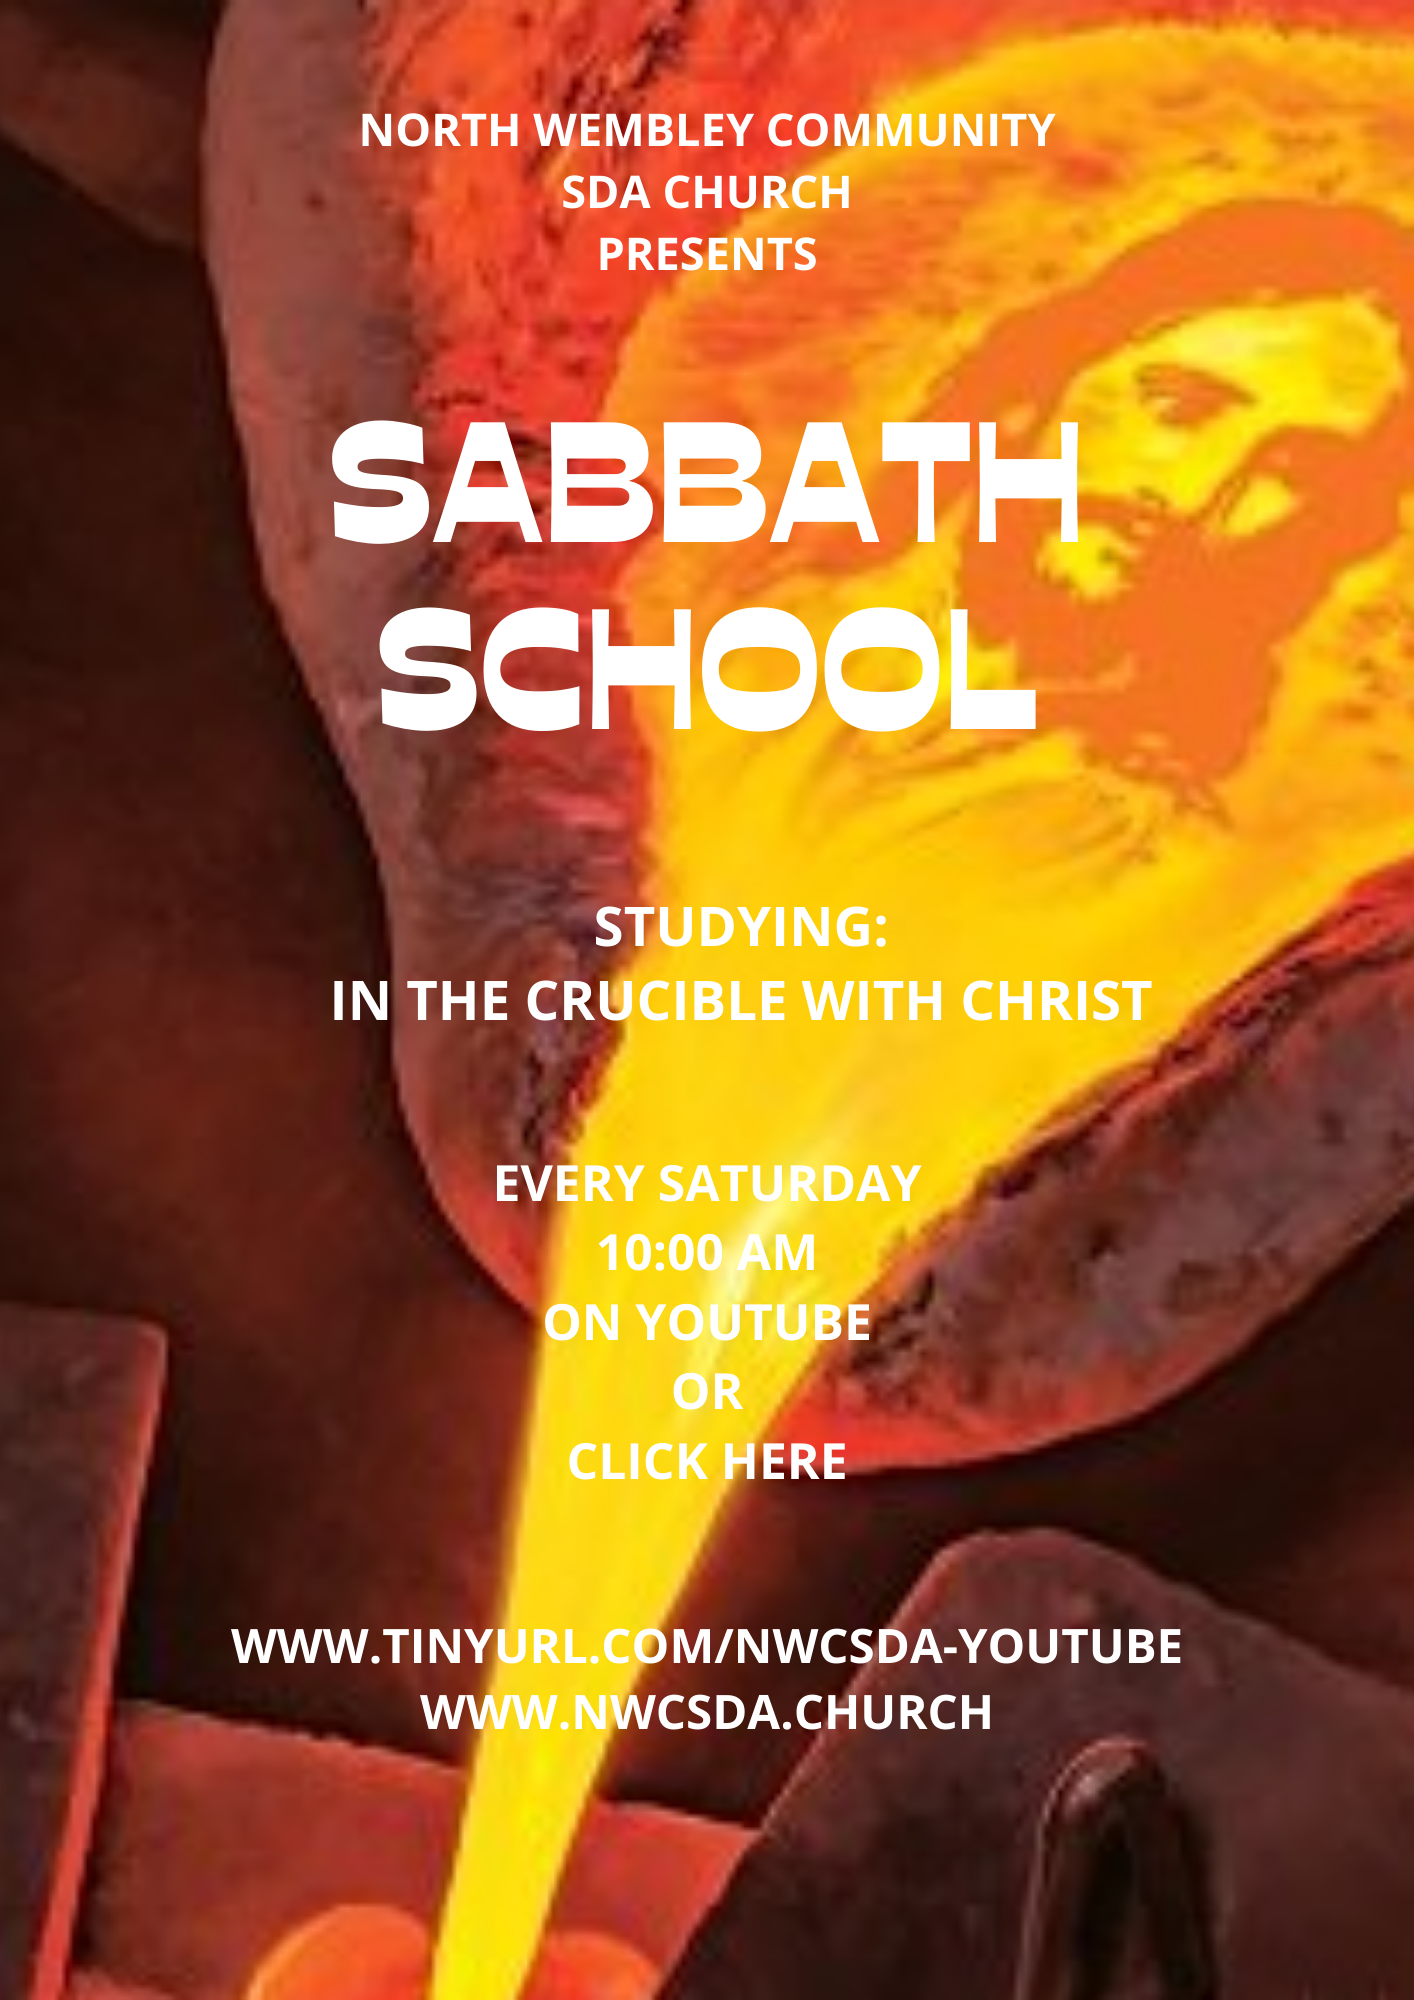 Sabbath School - Every Saturday at 10:00